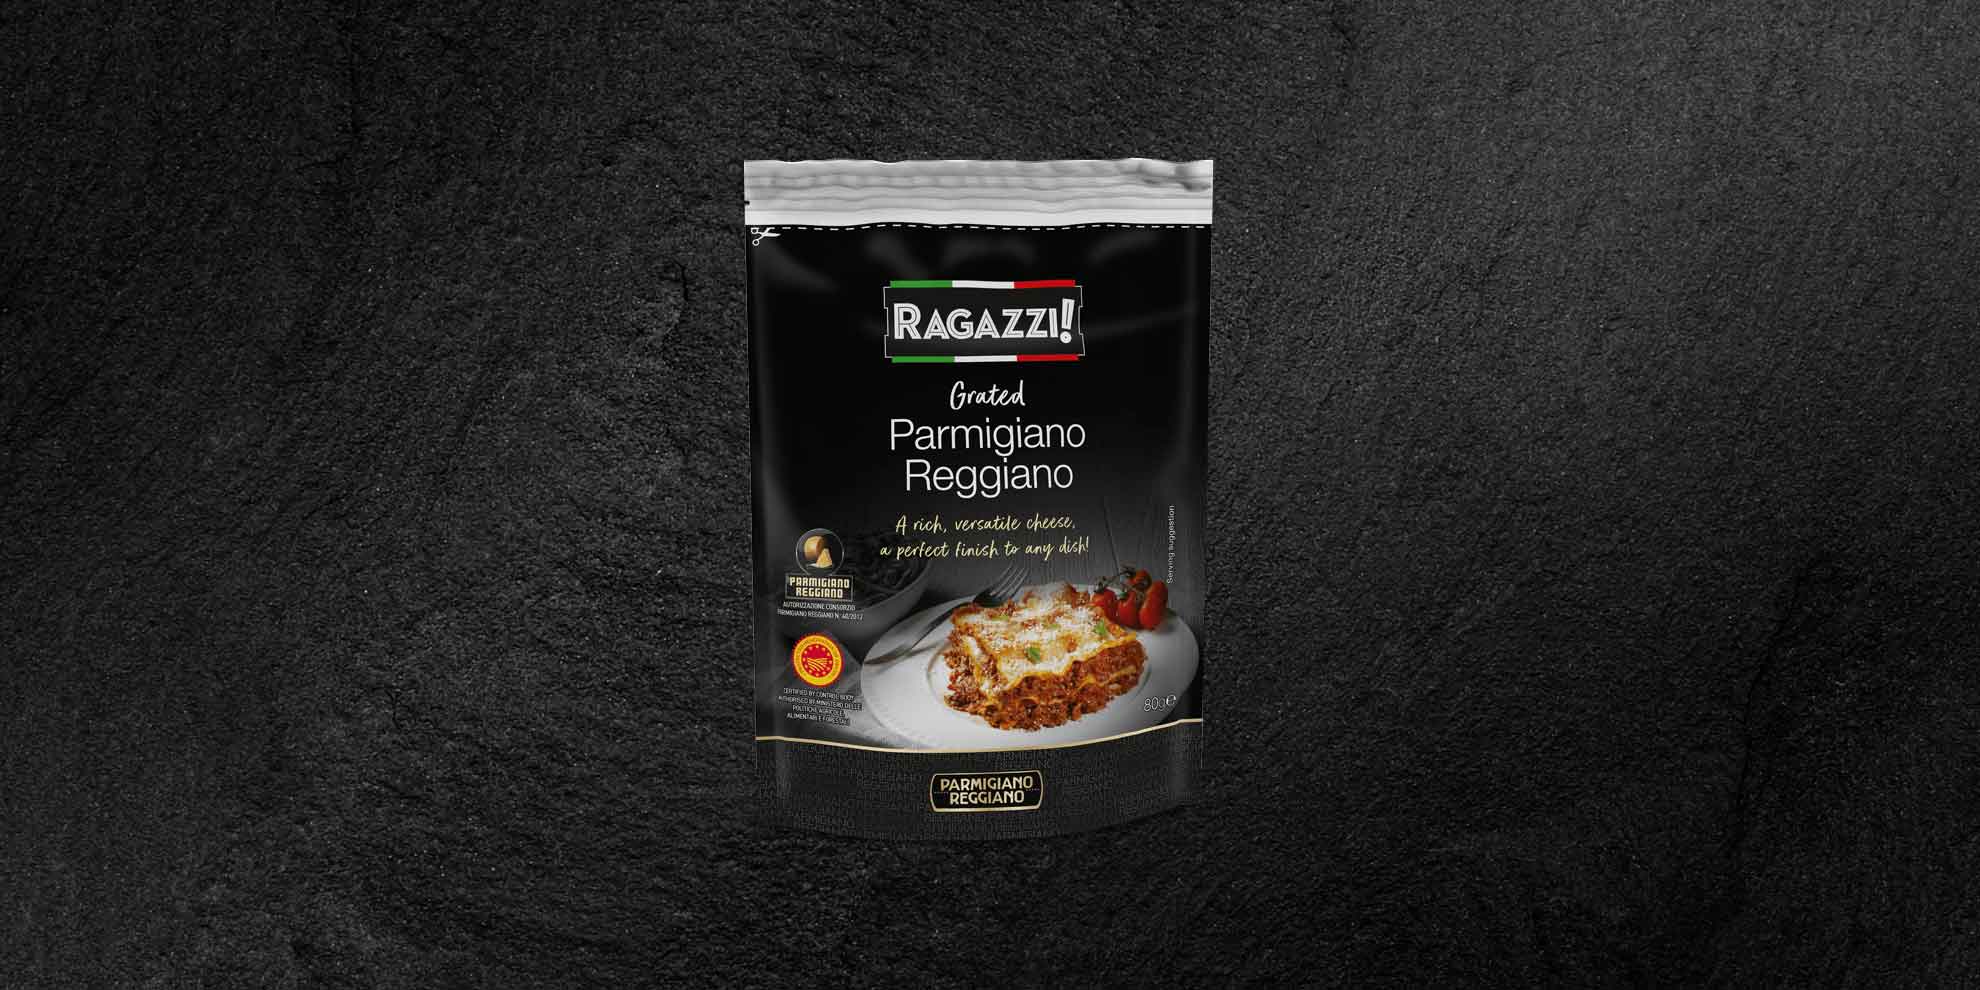 RAGAZZI! Grated Parmigiano Reggiano Parmesan cheese